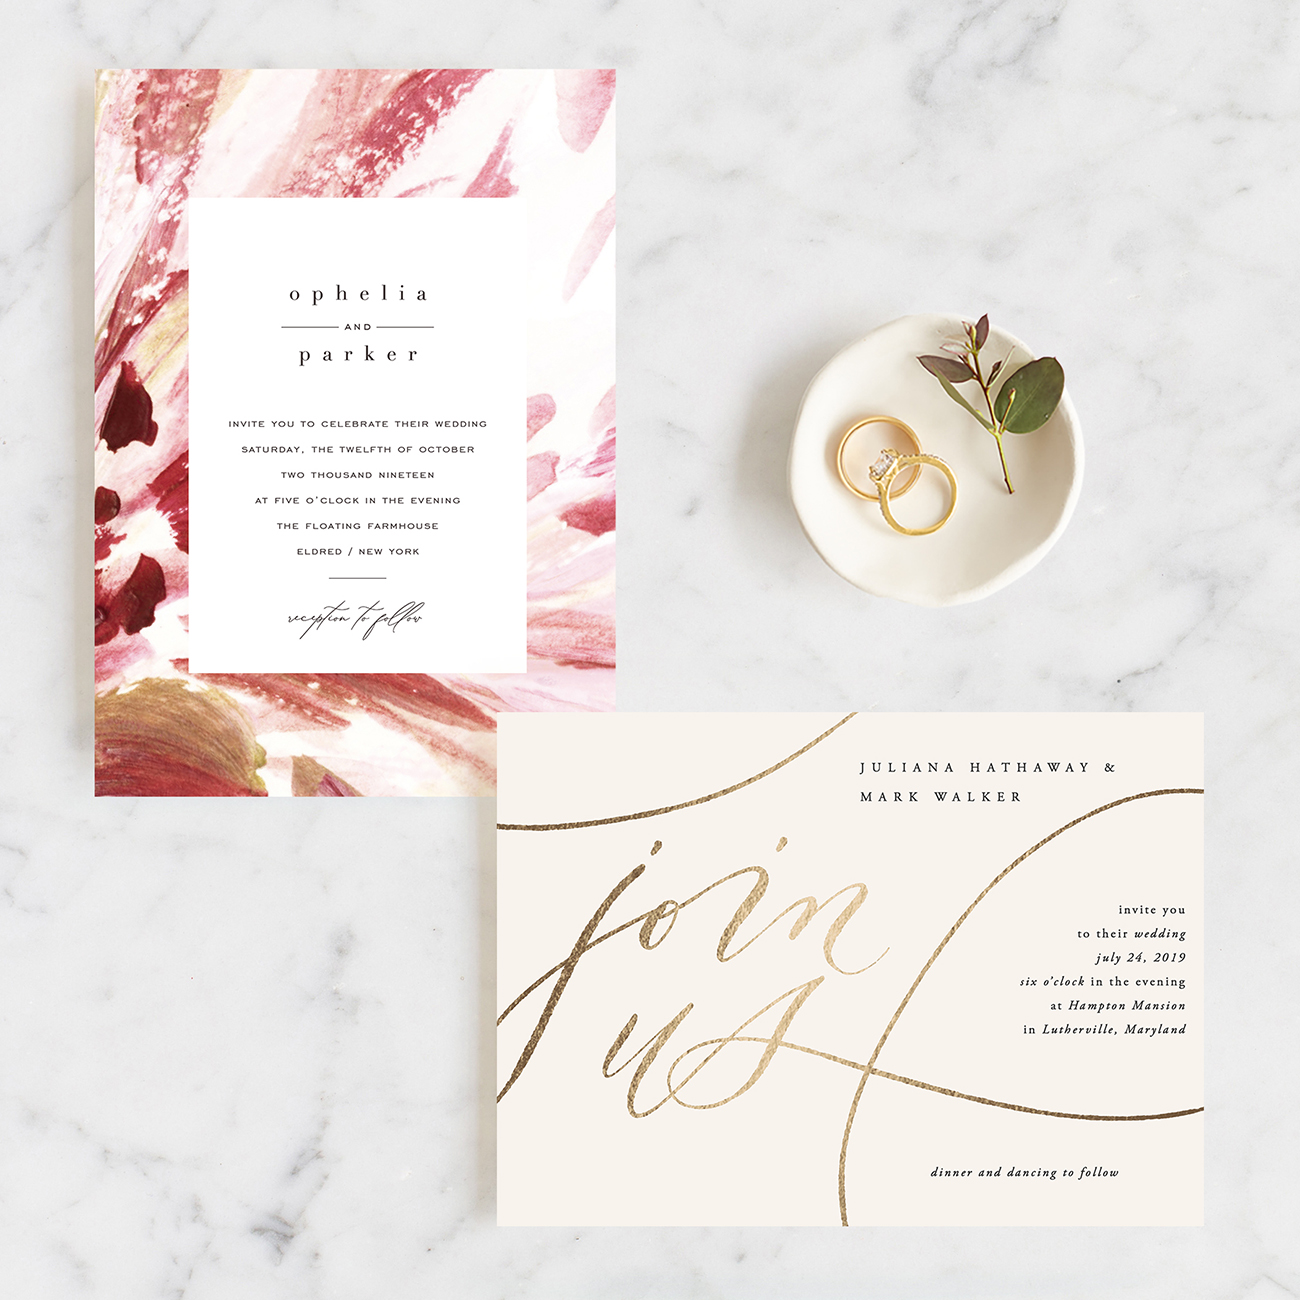 choose wedding color scheme - Minted Paper Goods Wedding Invitation Suite